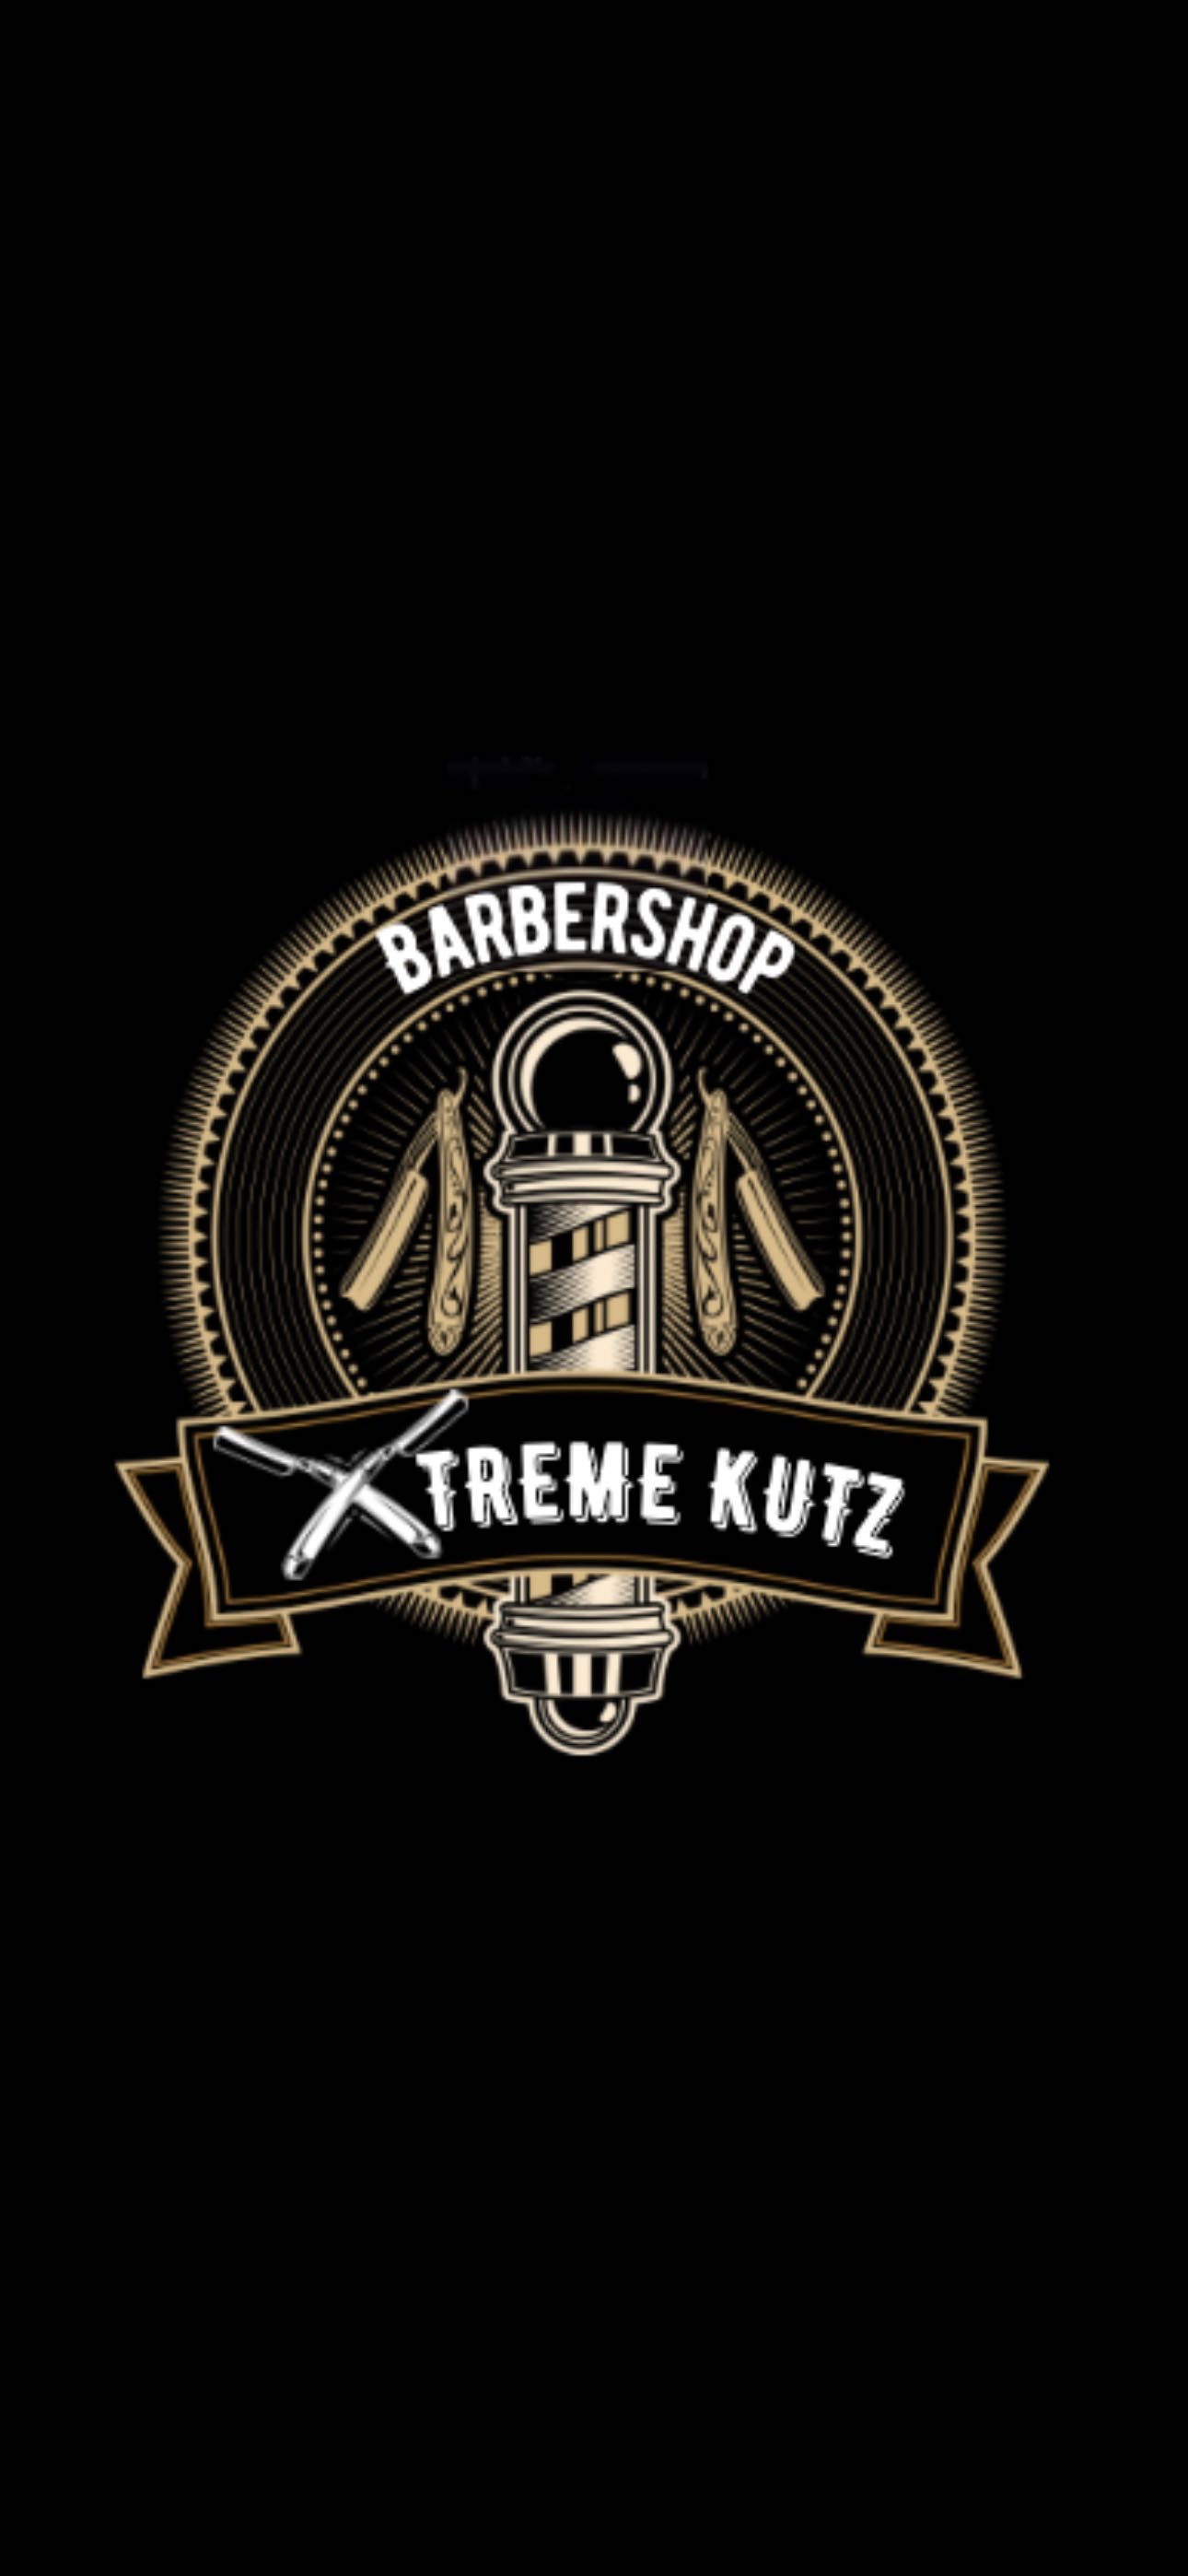 Xtreme kutz barbershop, 1184 E Santa Clara St, San Jose, 95116